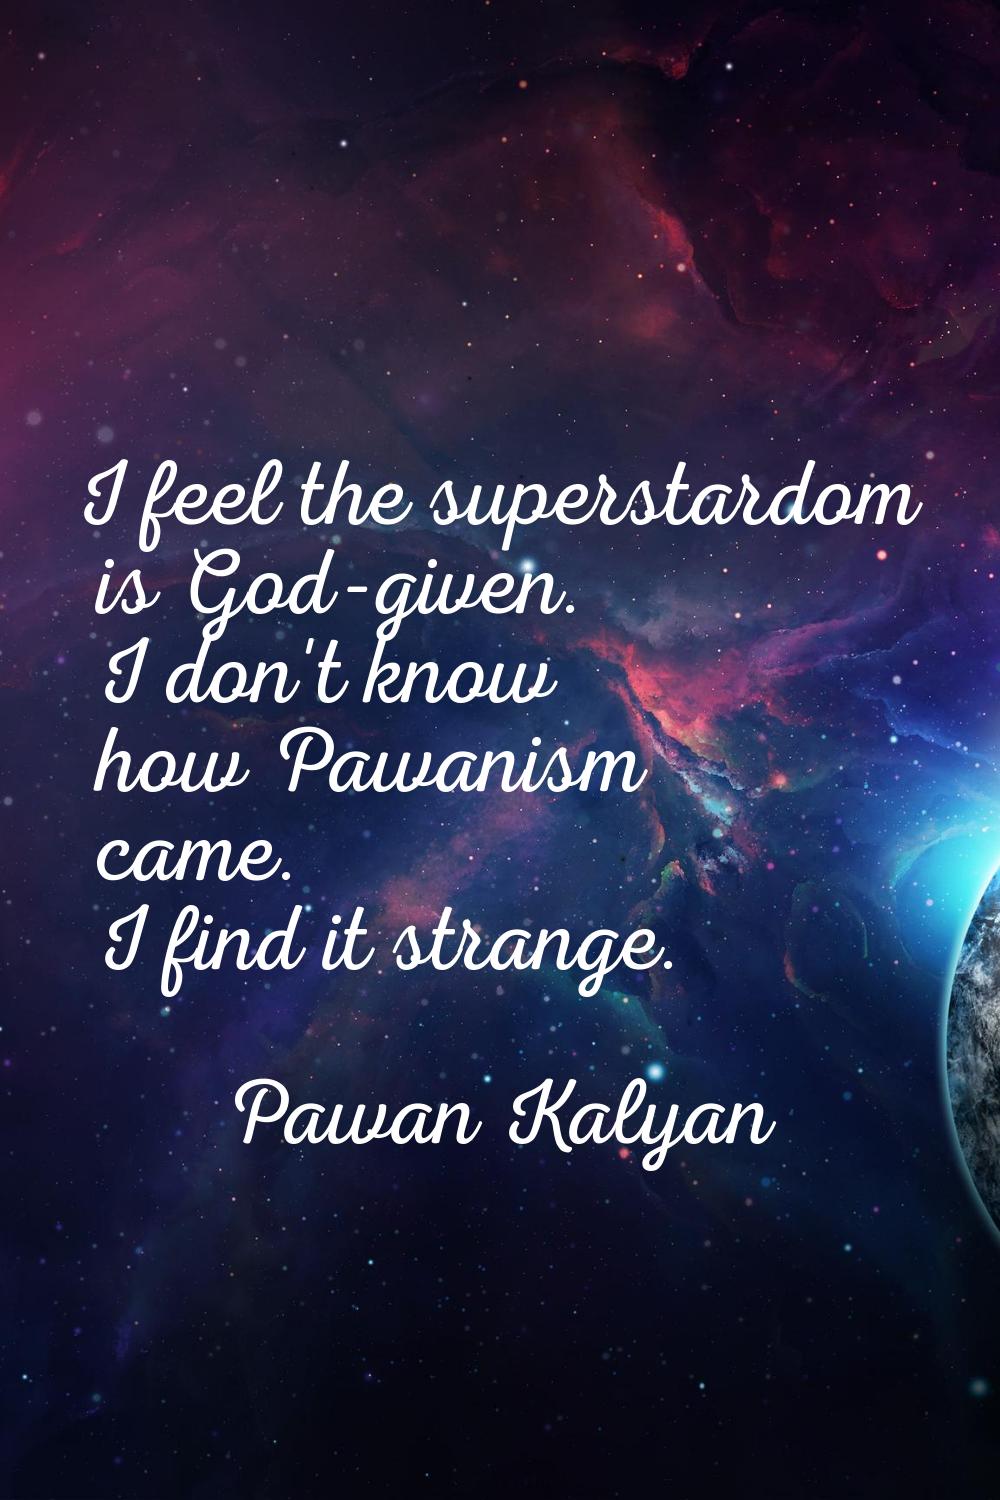 I feel the superstardom is God-given. I don't know how Pawanism came. I find it strange.